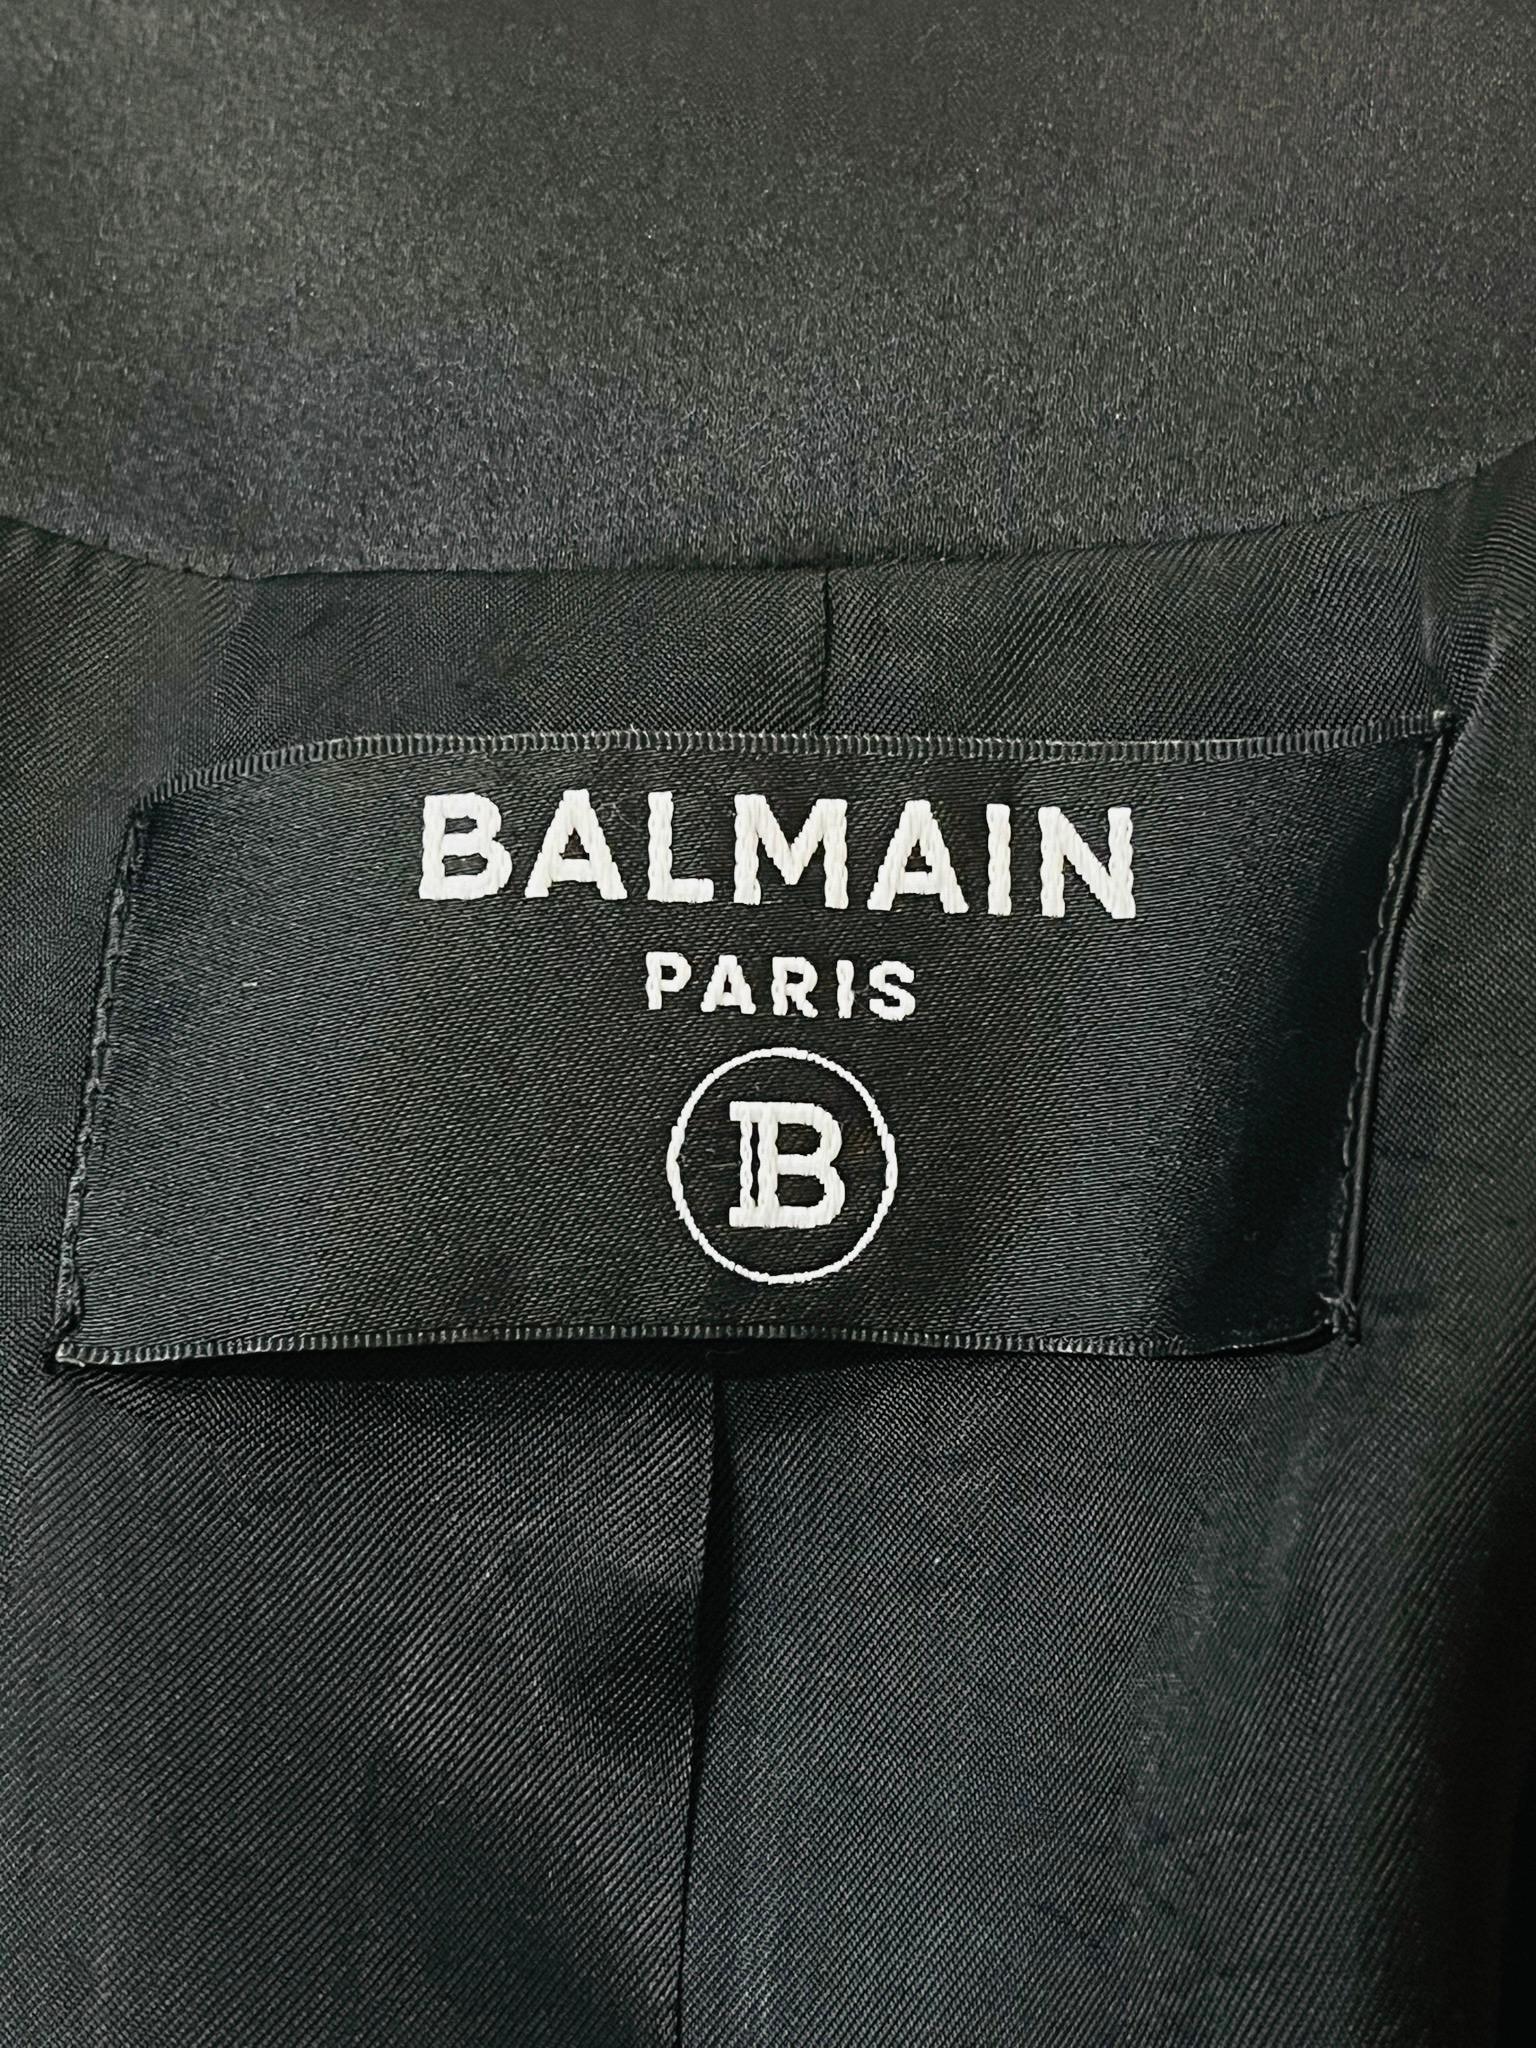 Balmain Tailored Silk Jacket For Sale 2